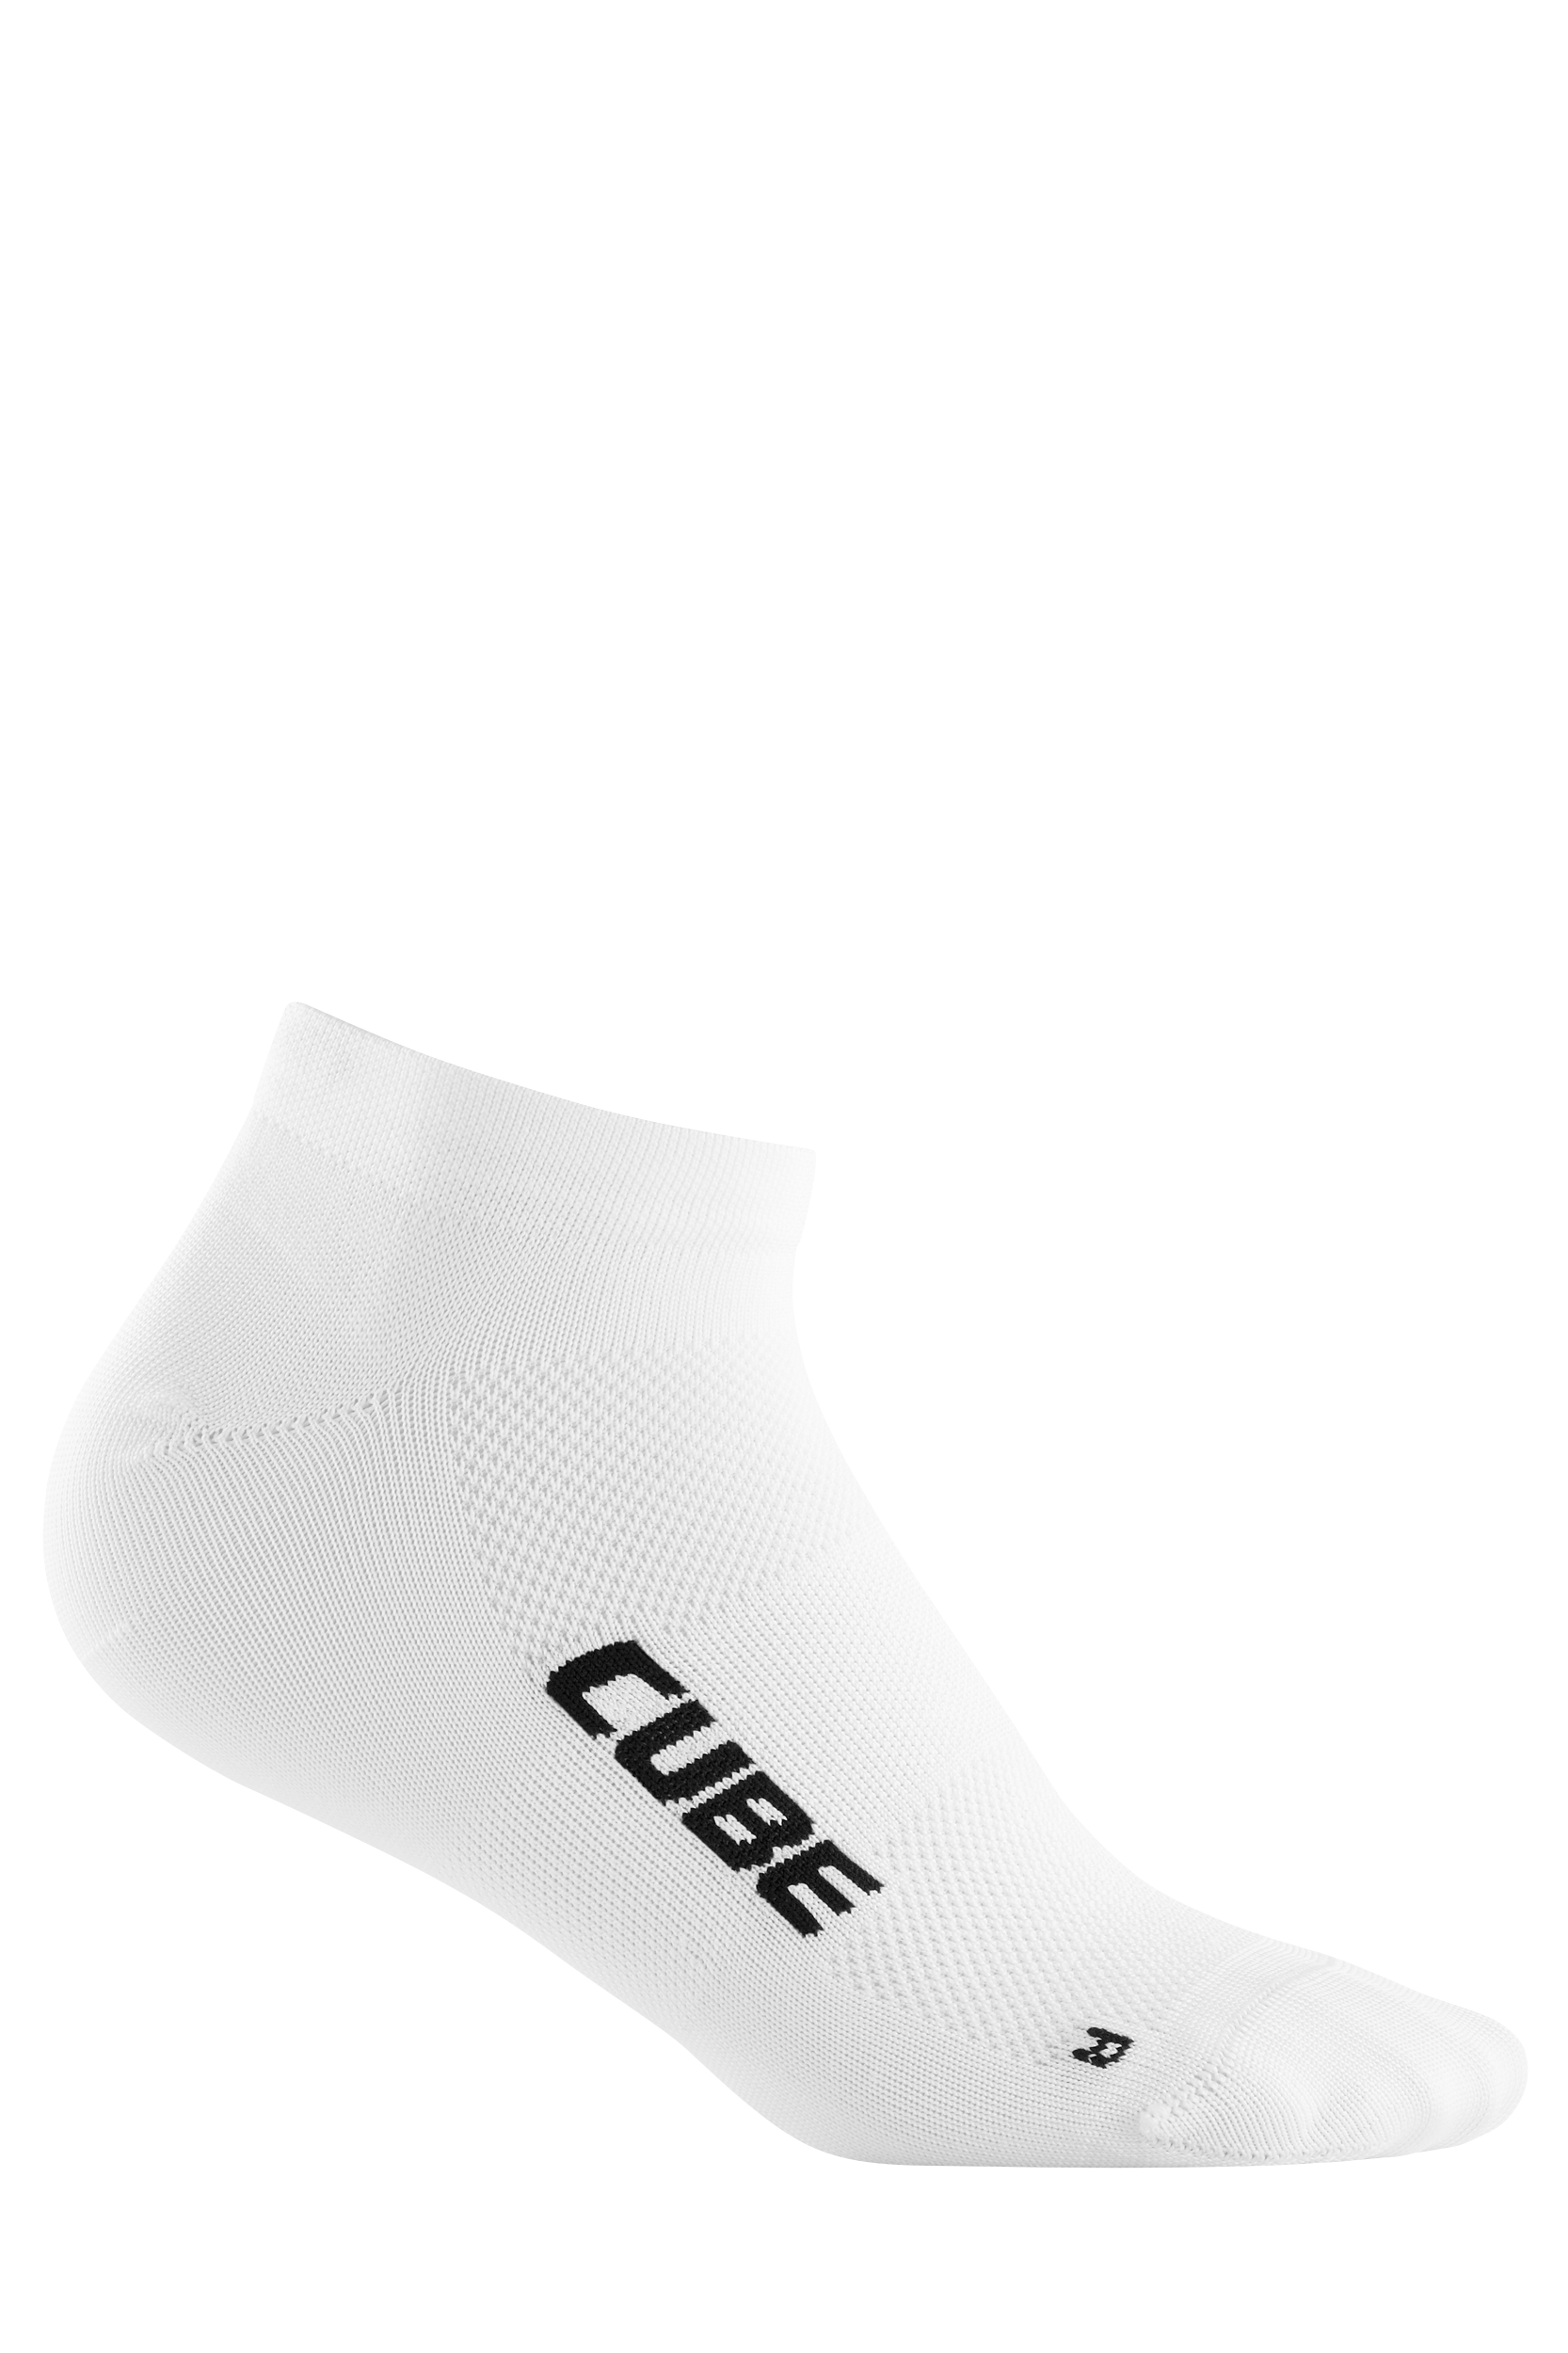 CUBE Socks Low Cut Blackline